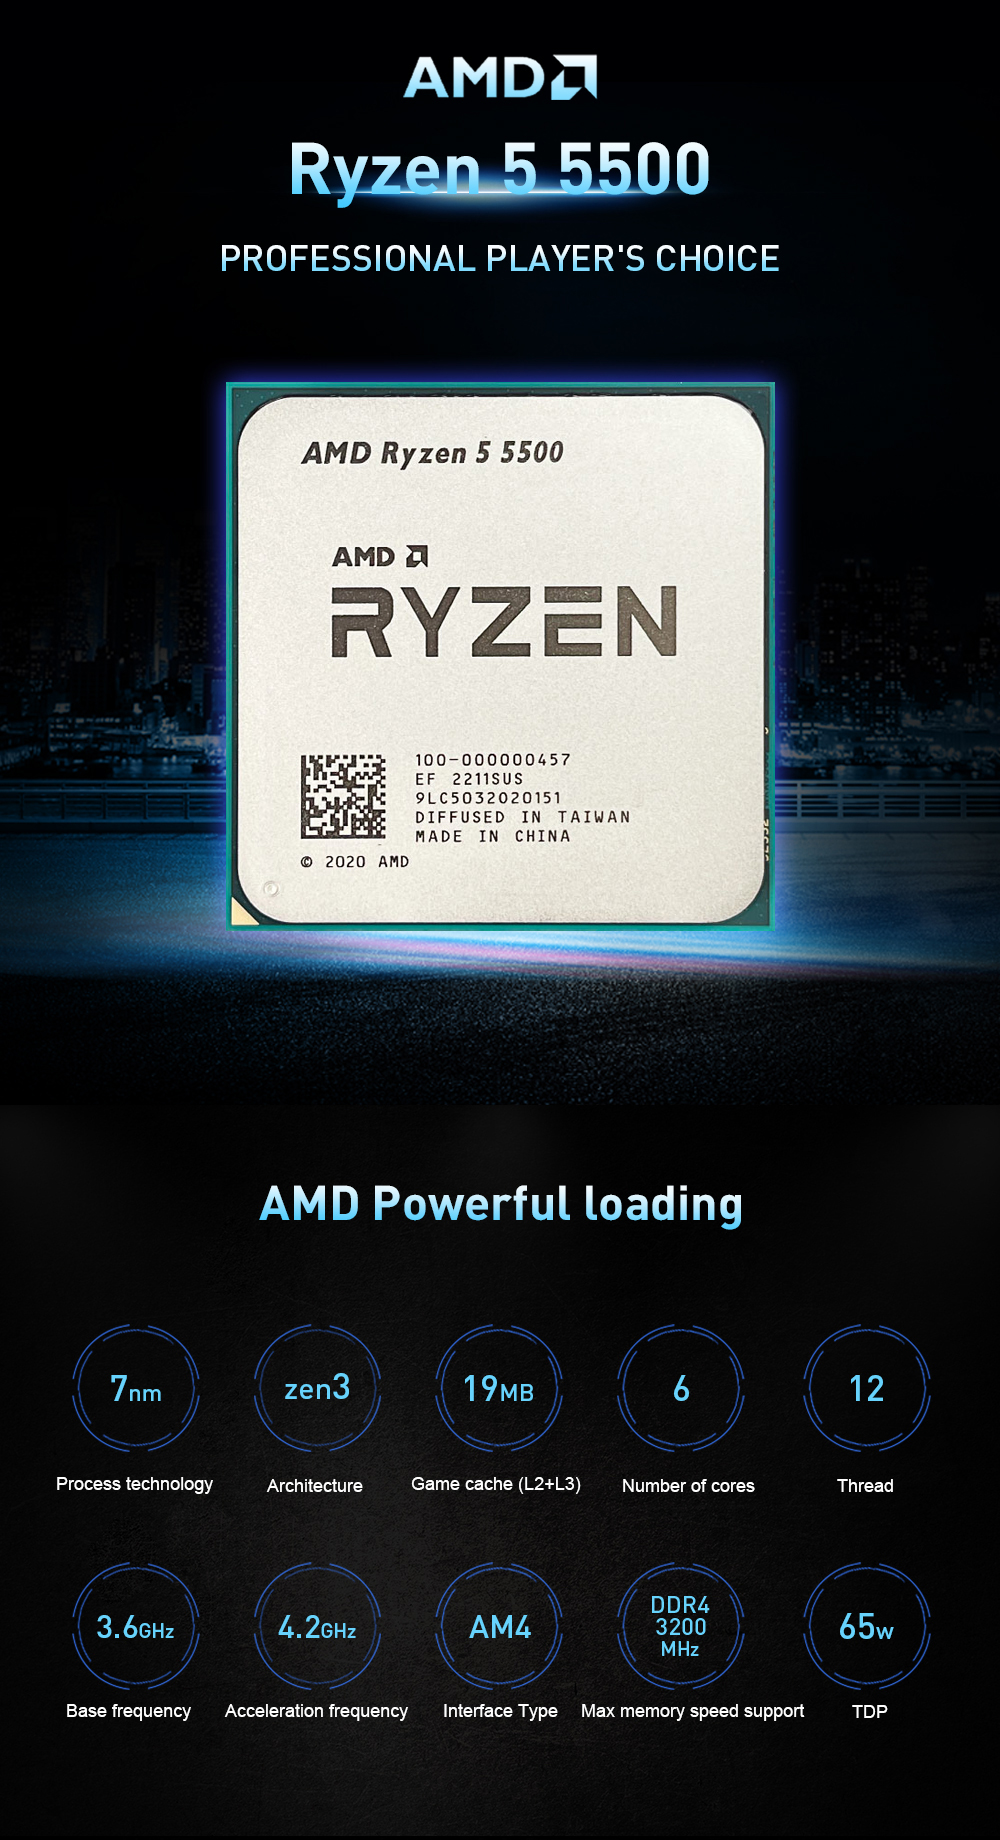 BIOSTAR New GAMING B550MH Micro-ATX B550M Motherboard + AMD Ryzen 5 5500 R5 5500 CPU Processor DDR4 64G AM4 Motherboard Kit